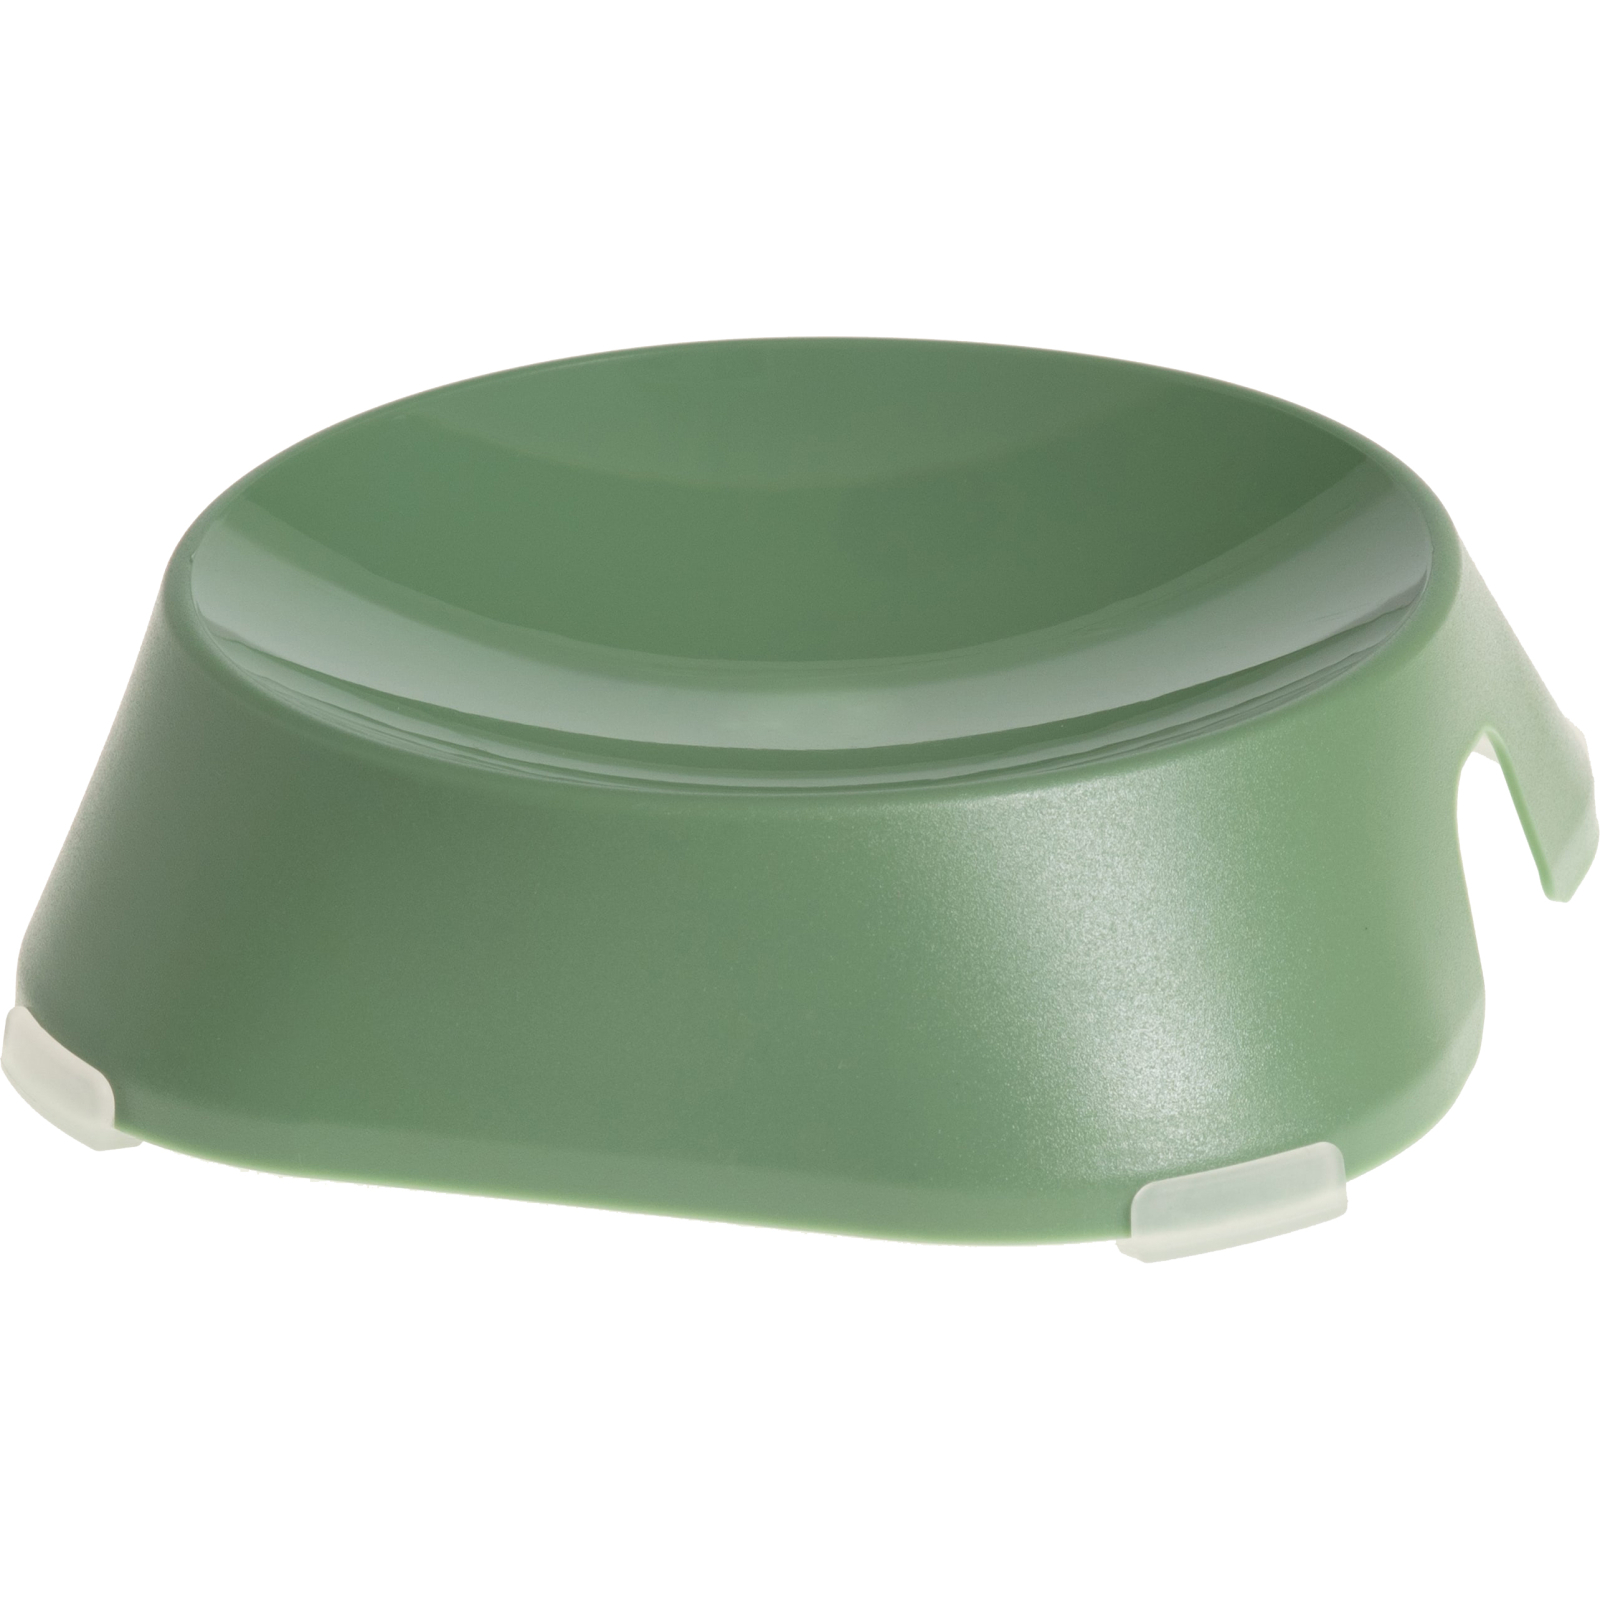 Посуда для кошек Fiboo Flat Bowl миска с антискользящими накладками зеленая (FIB0087)